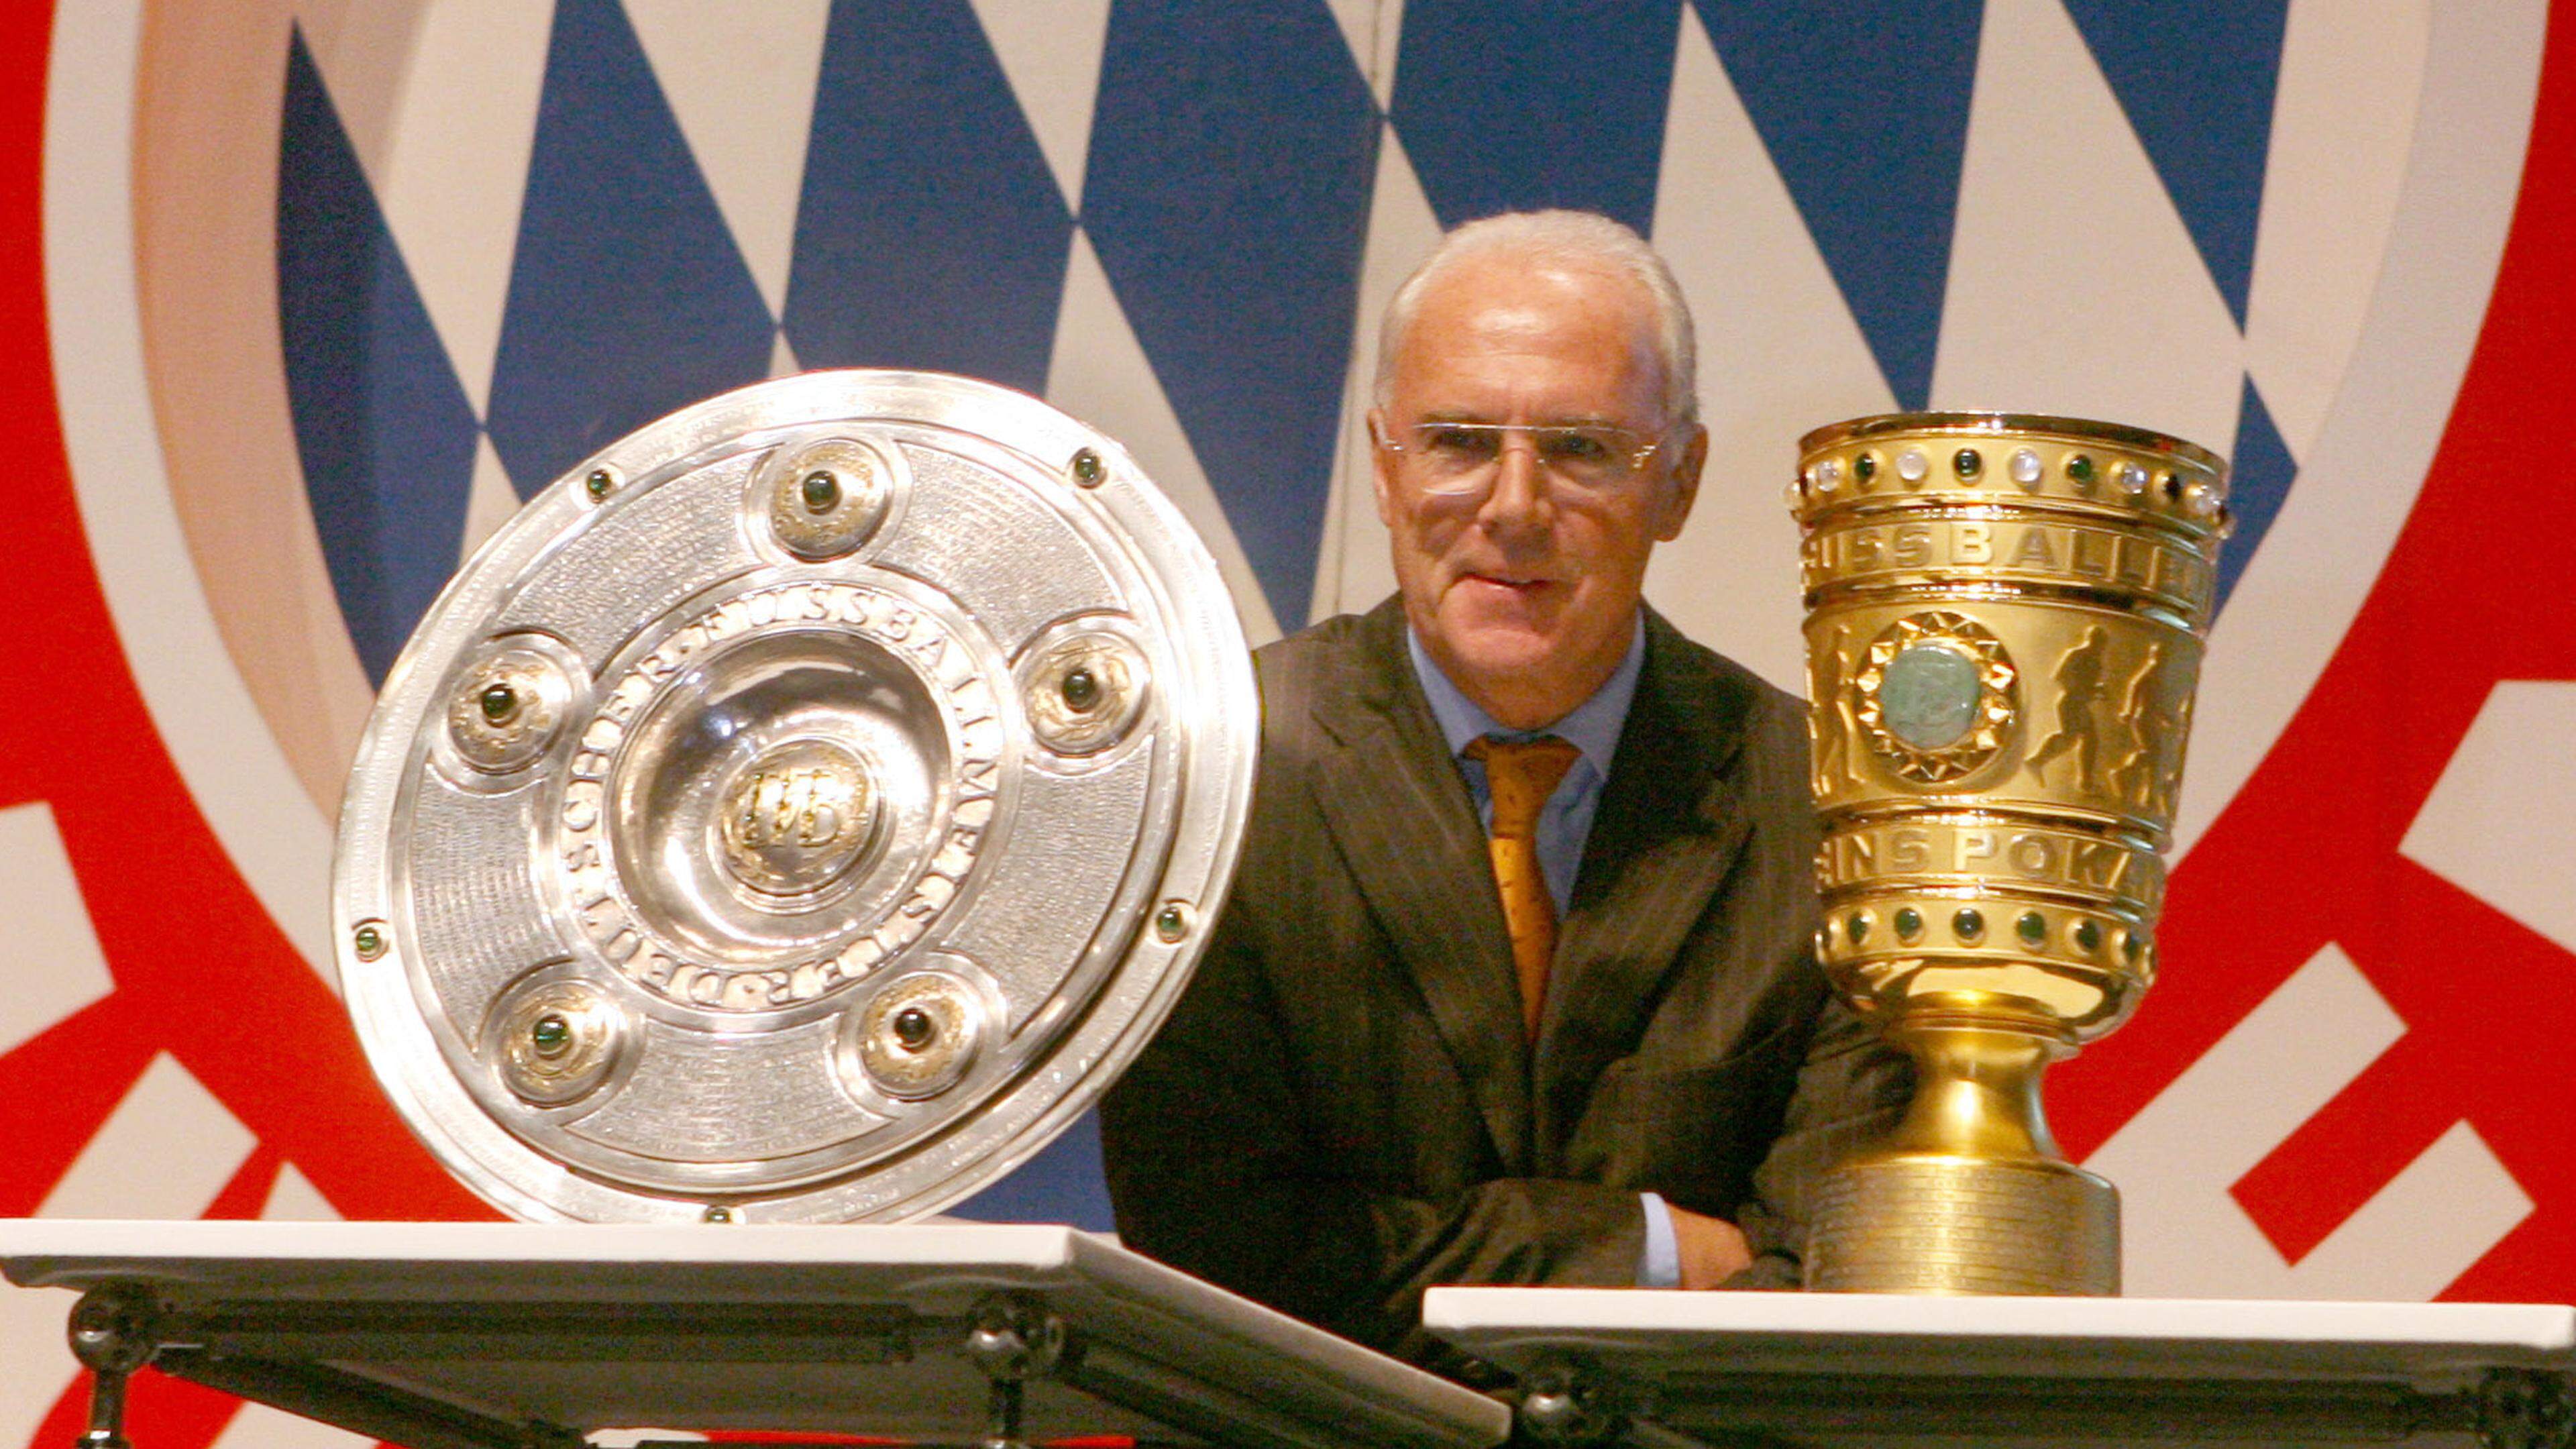 La légende du football allemand Franz Beckenbauer est mort